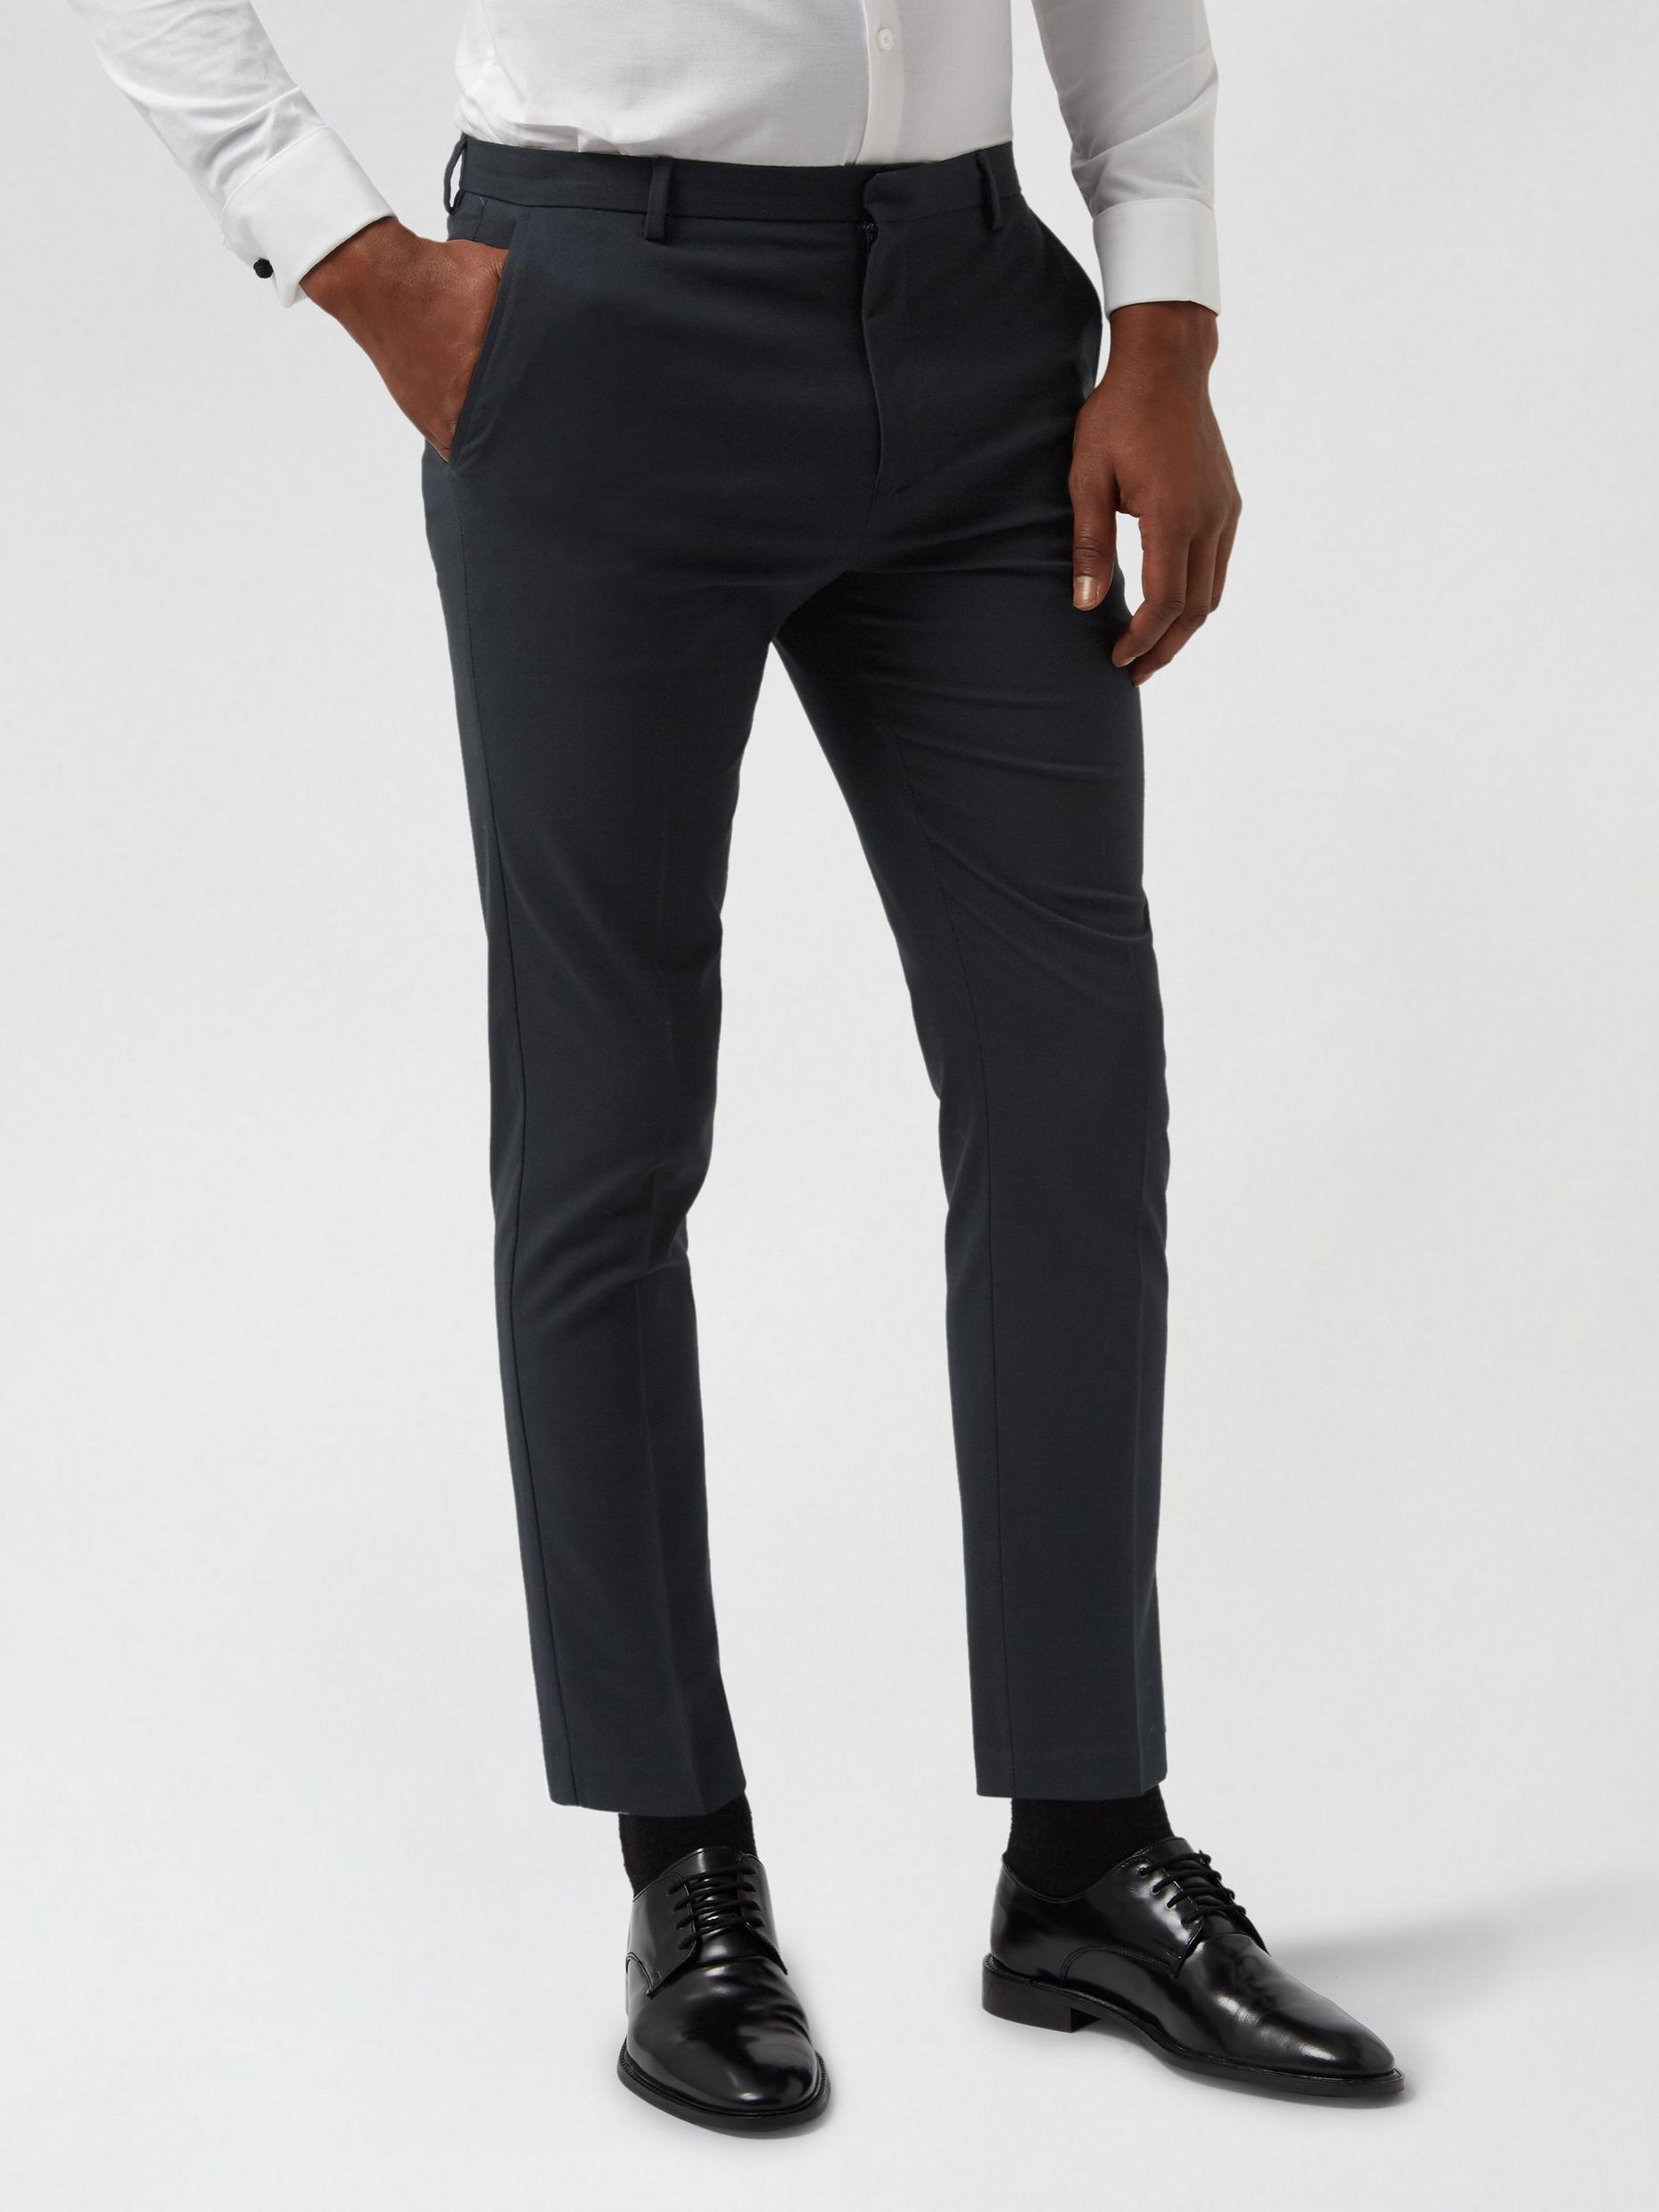 Men's Trousers Sale | Formal and Smart Trousers Sale | Burton